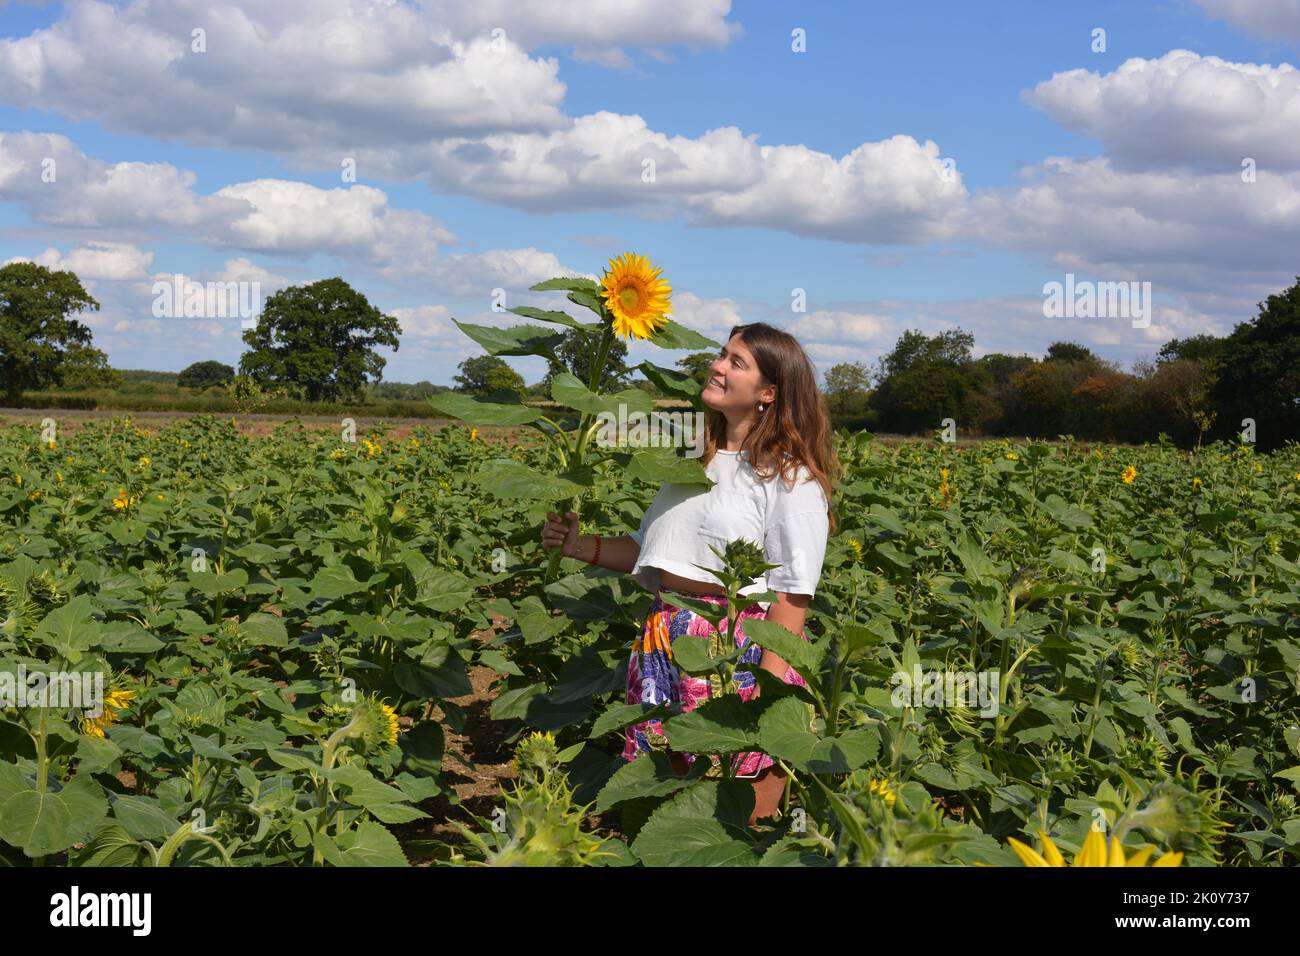 Gen Z woman in a PYO sunflower field in summer, holding a larger flower Stock Photo